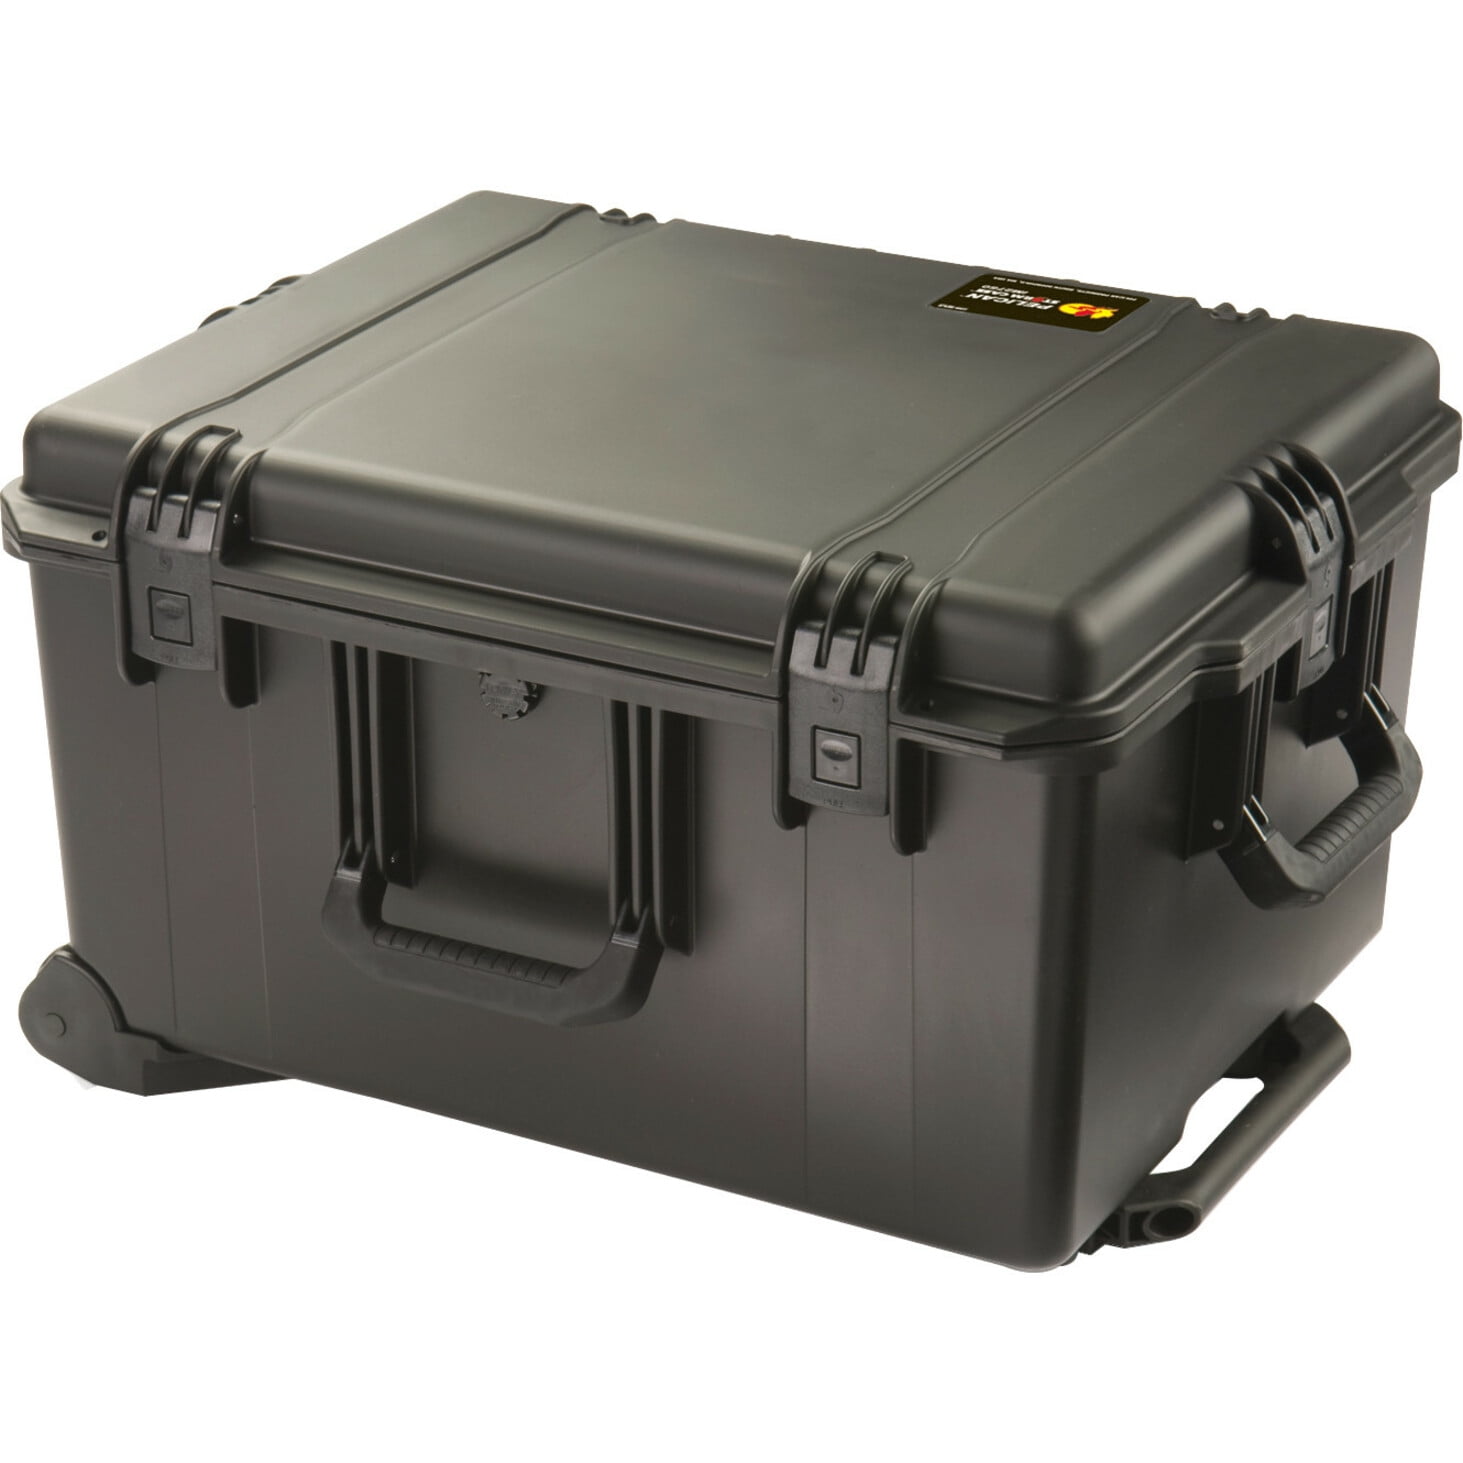 Pelican Case 1610 with Foam Insert for Oculus Rift VR System-Large Laptop  (CASE & Foam) 